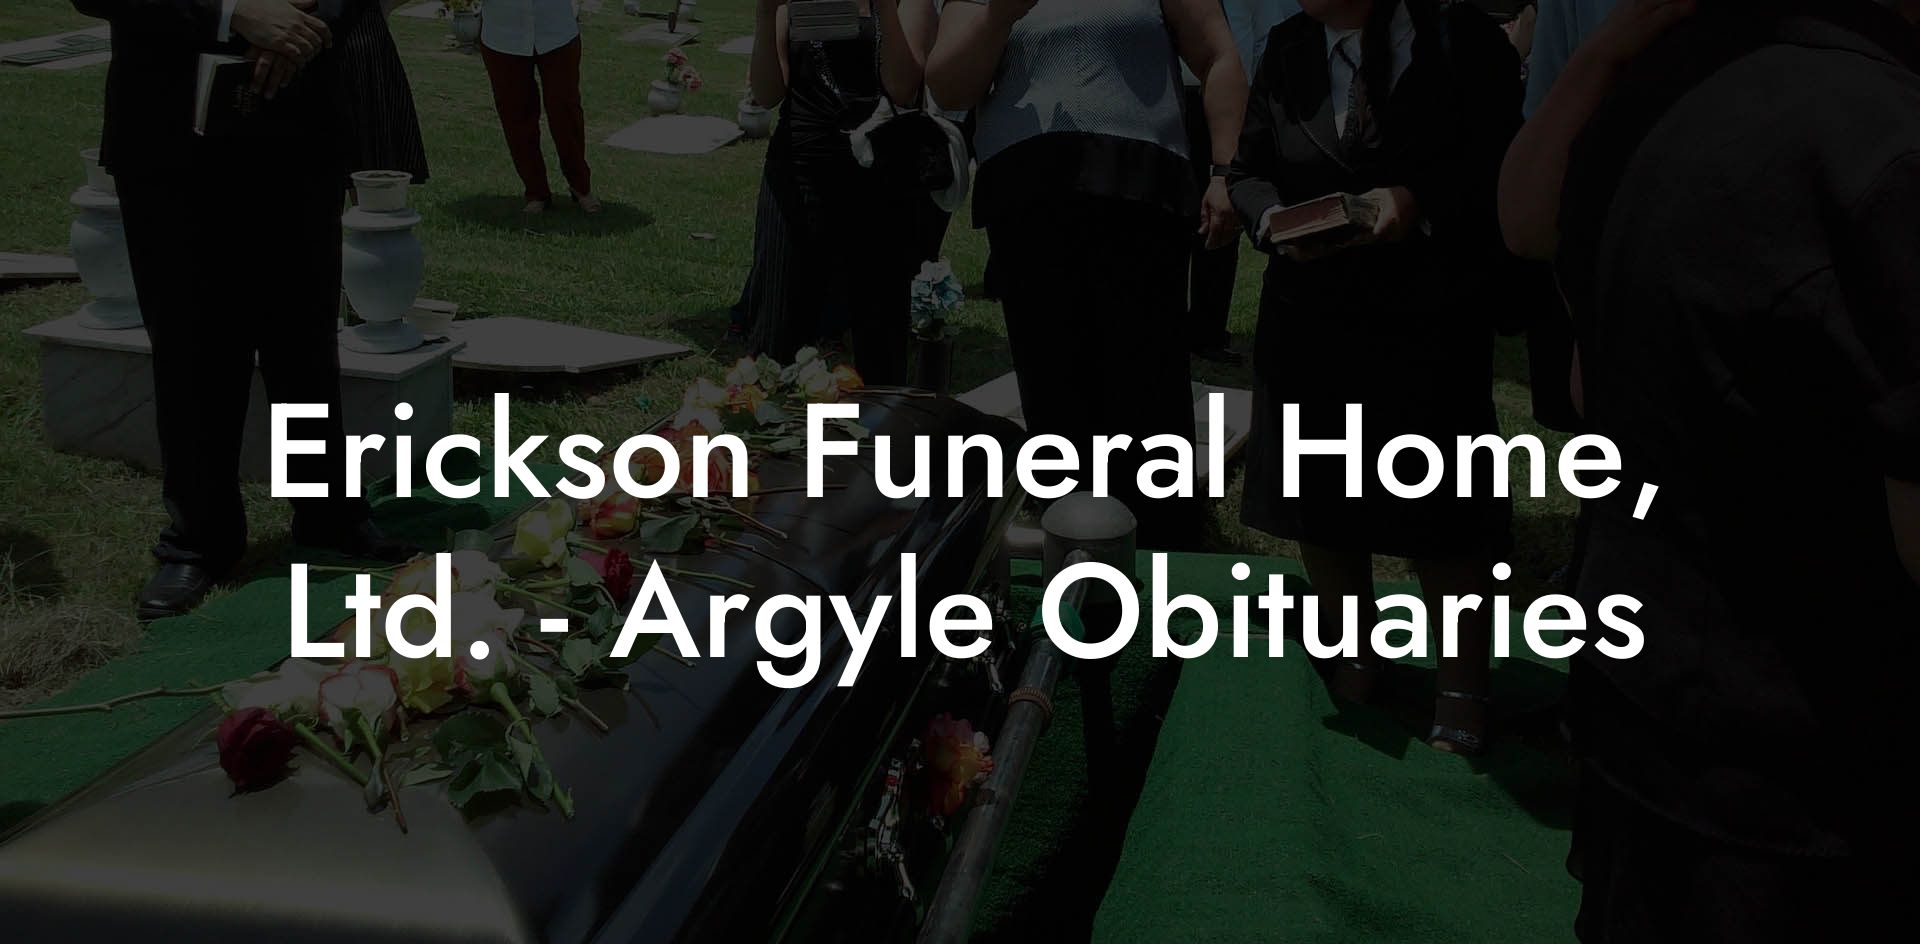 Erickson Funeral Home, Ltd. - Argyle Obituaries